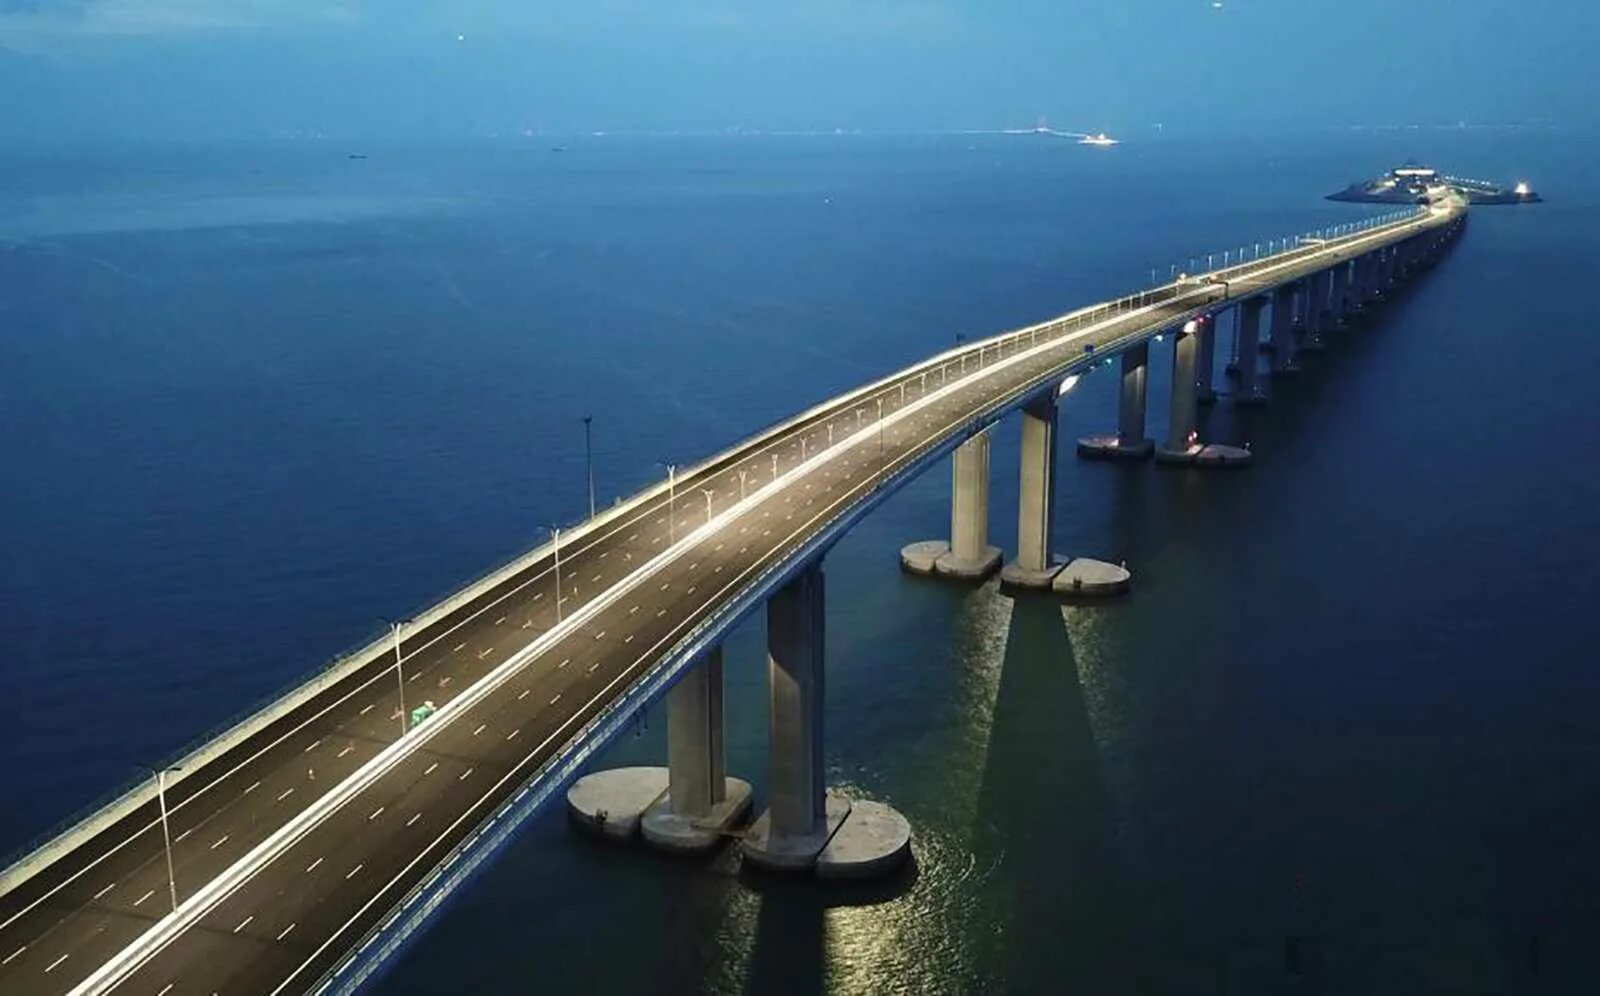 Самый большой конец в мире. Мост Гонконг - Чжухай - Макао. Даньян-Куньшаньский виадук Китай. Самый длинный мост в мире Даньян-Куньшаньский виадук. Моск Гонконг Чжухай Макао.